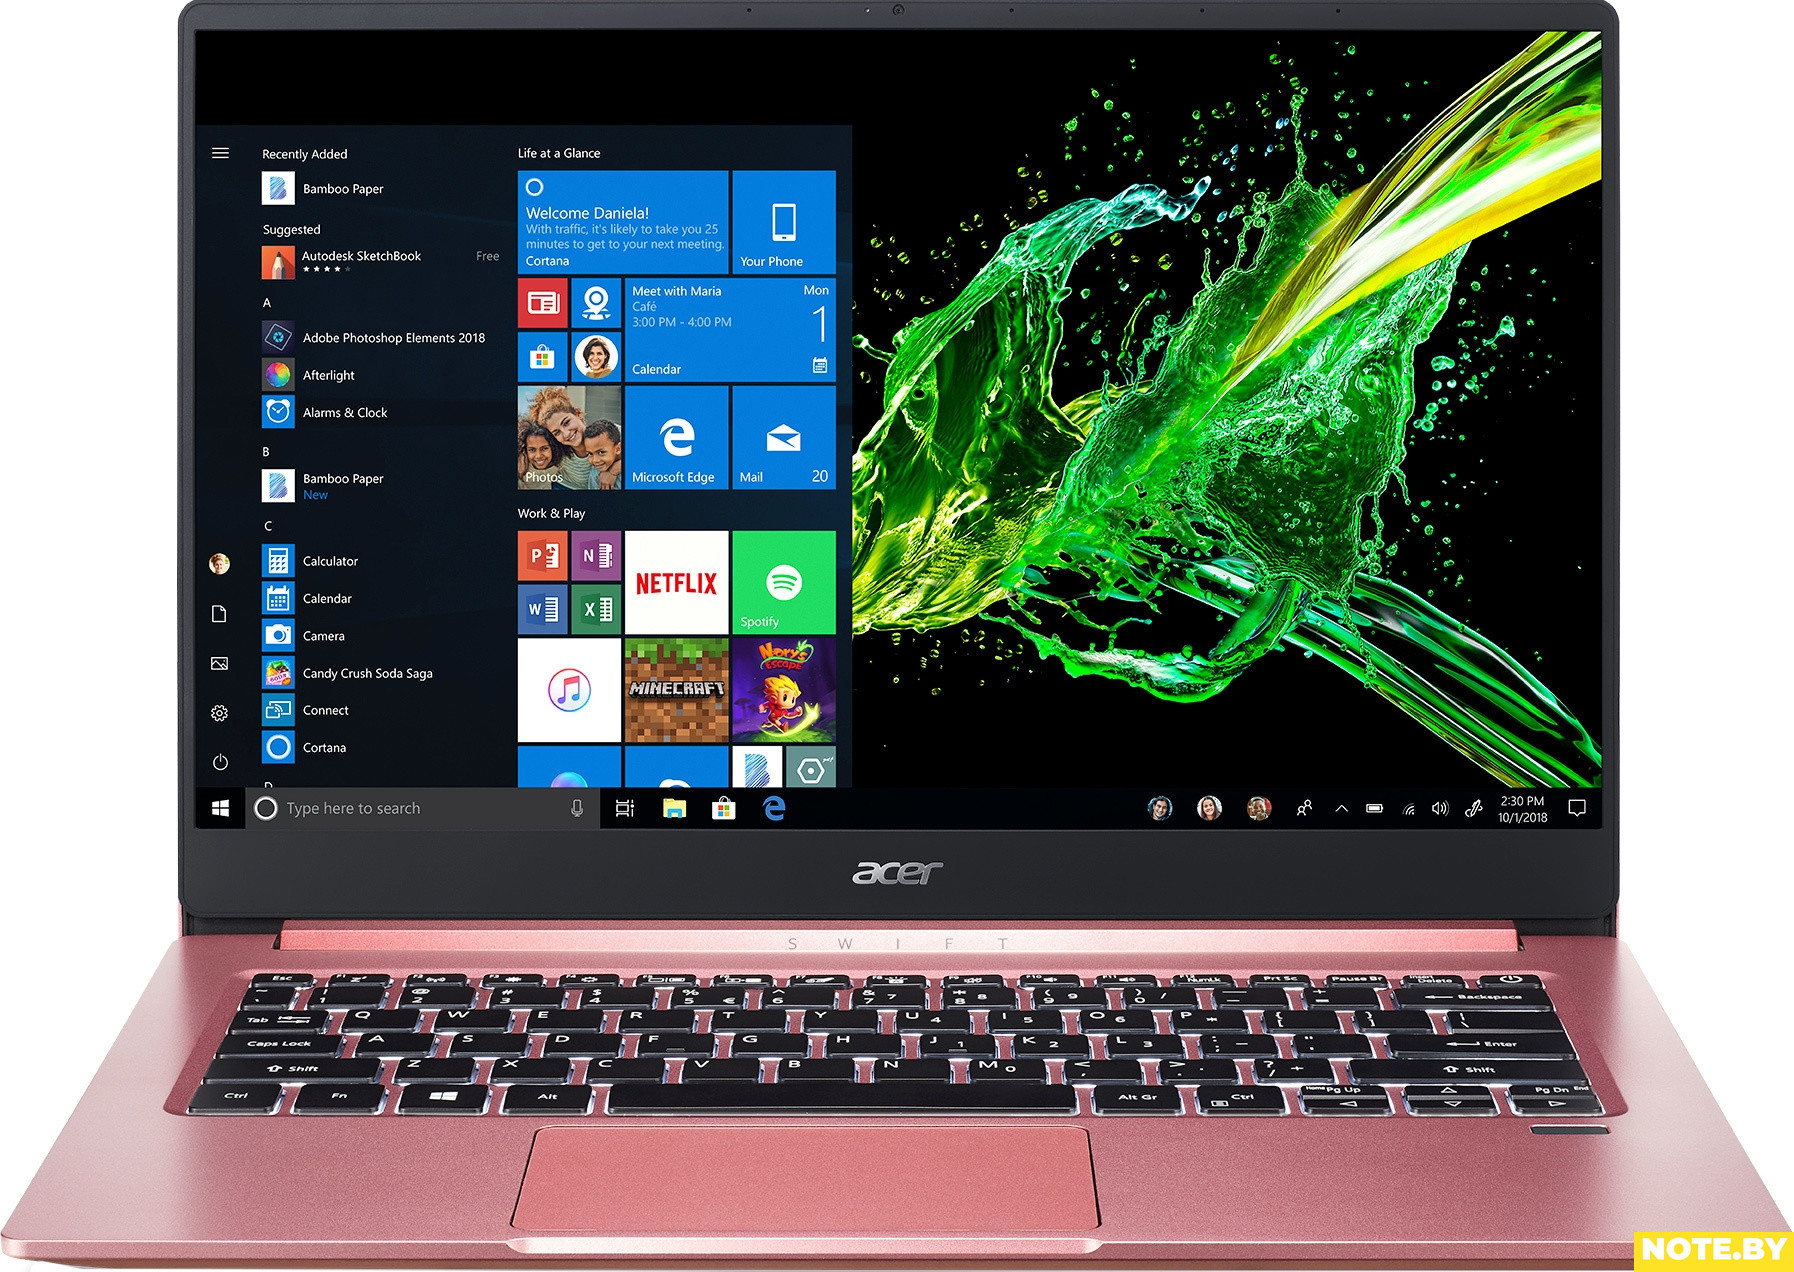 Ноутбук Acer Swift 3 SF314-57-75RP NX.HJMER.001